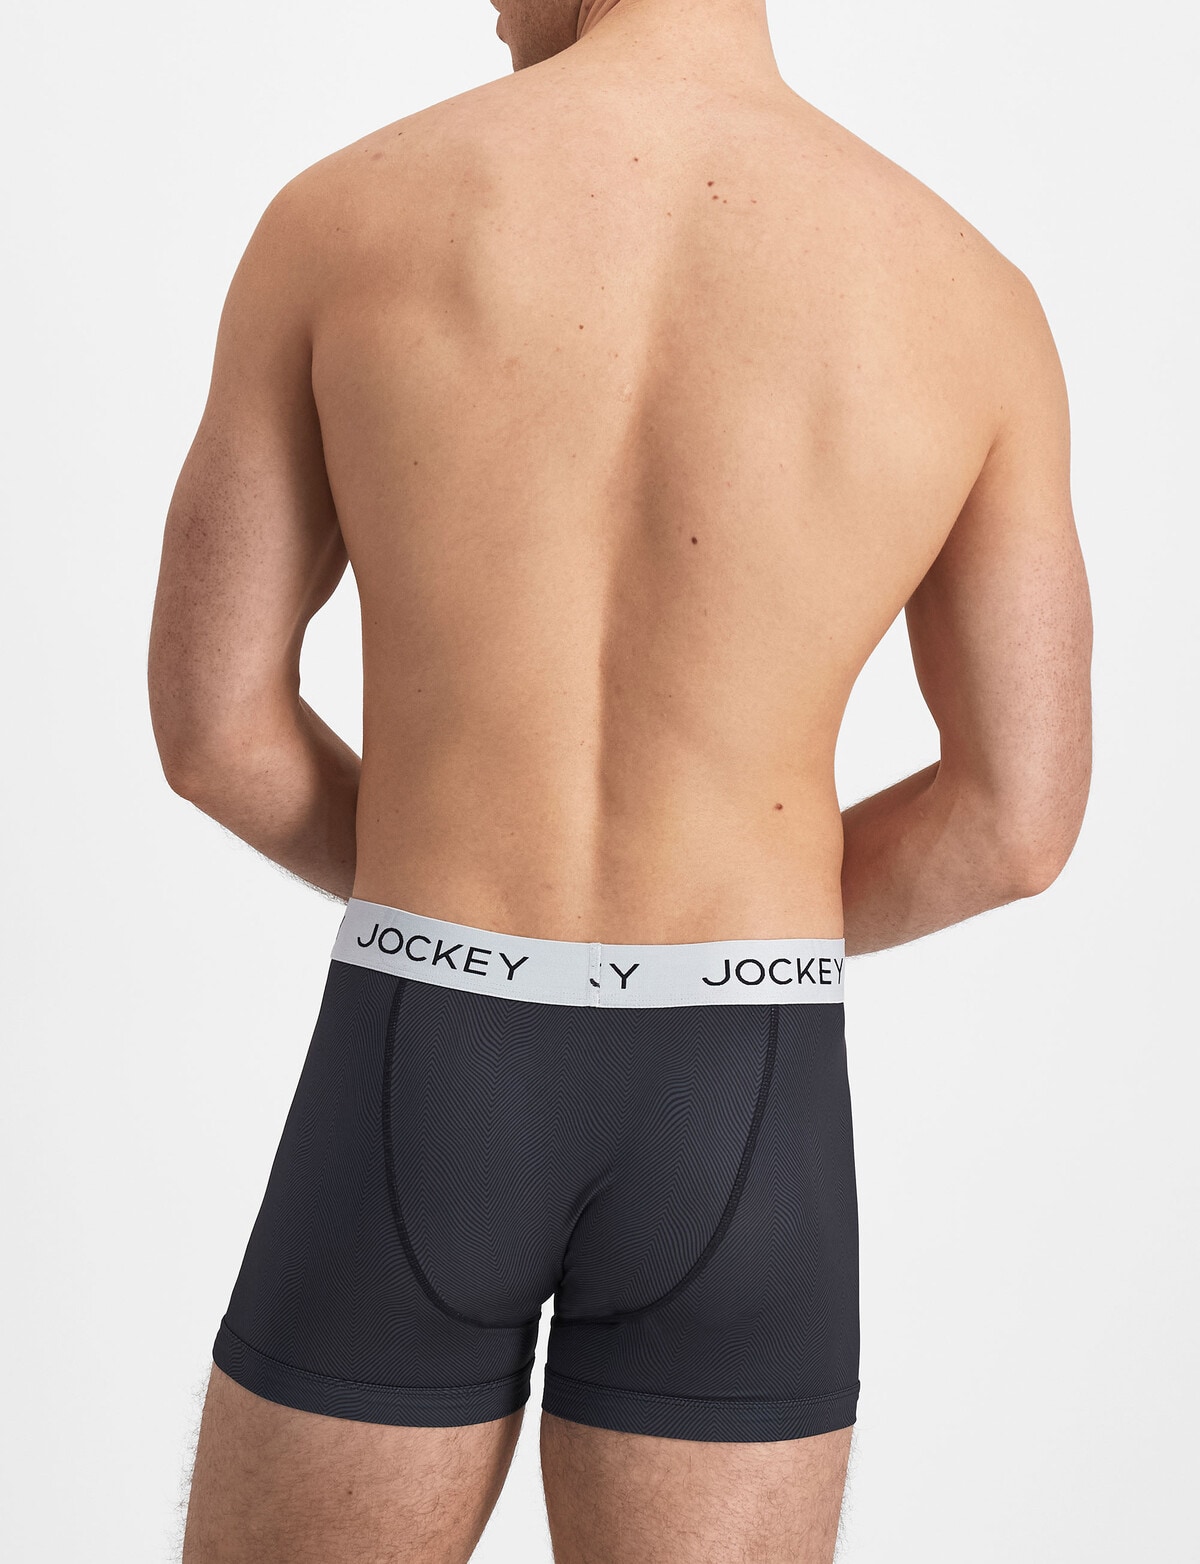 Jockey No Ride Up Micro Trunk, Charcoal - Underwear